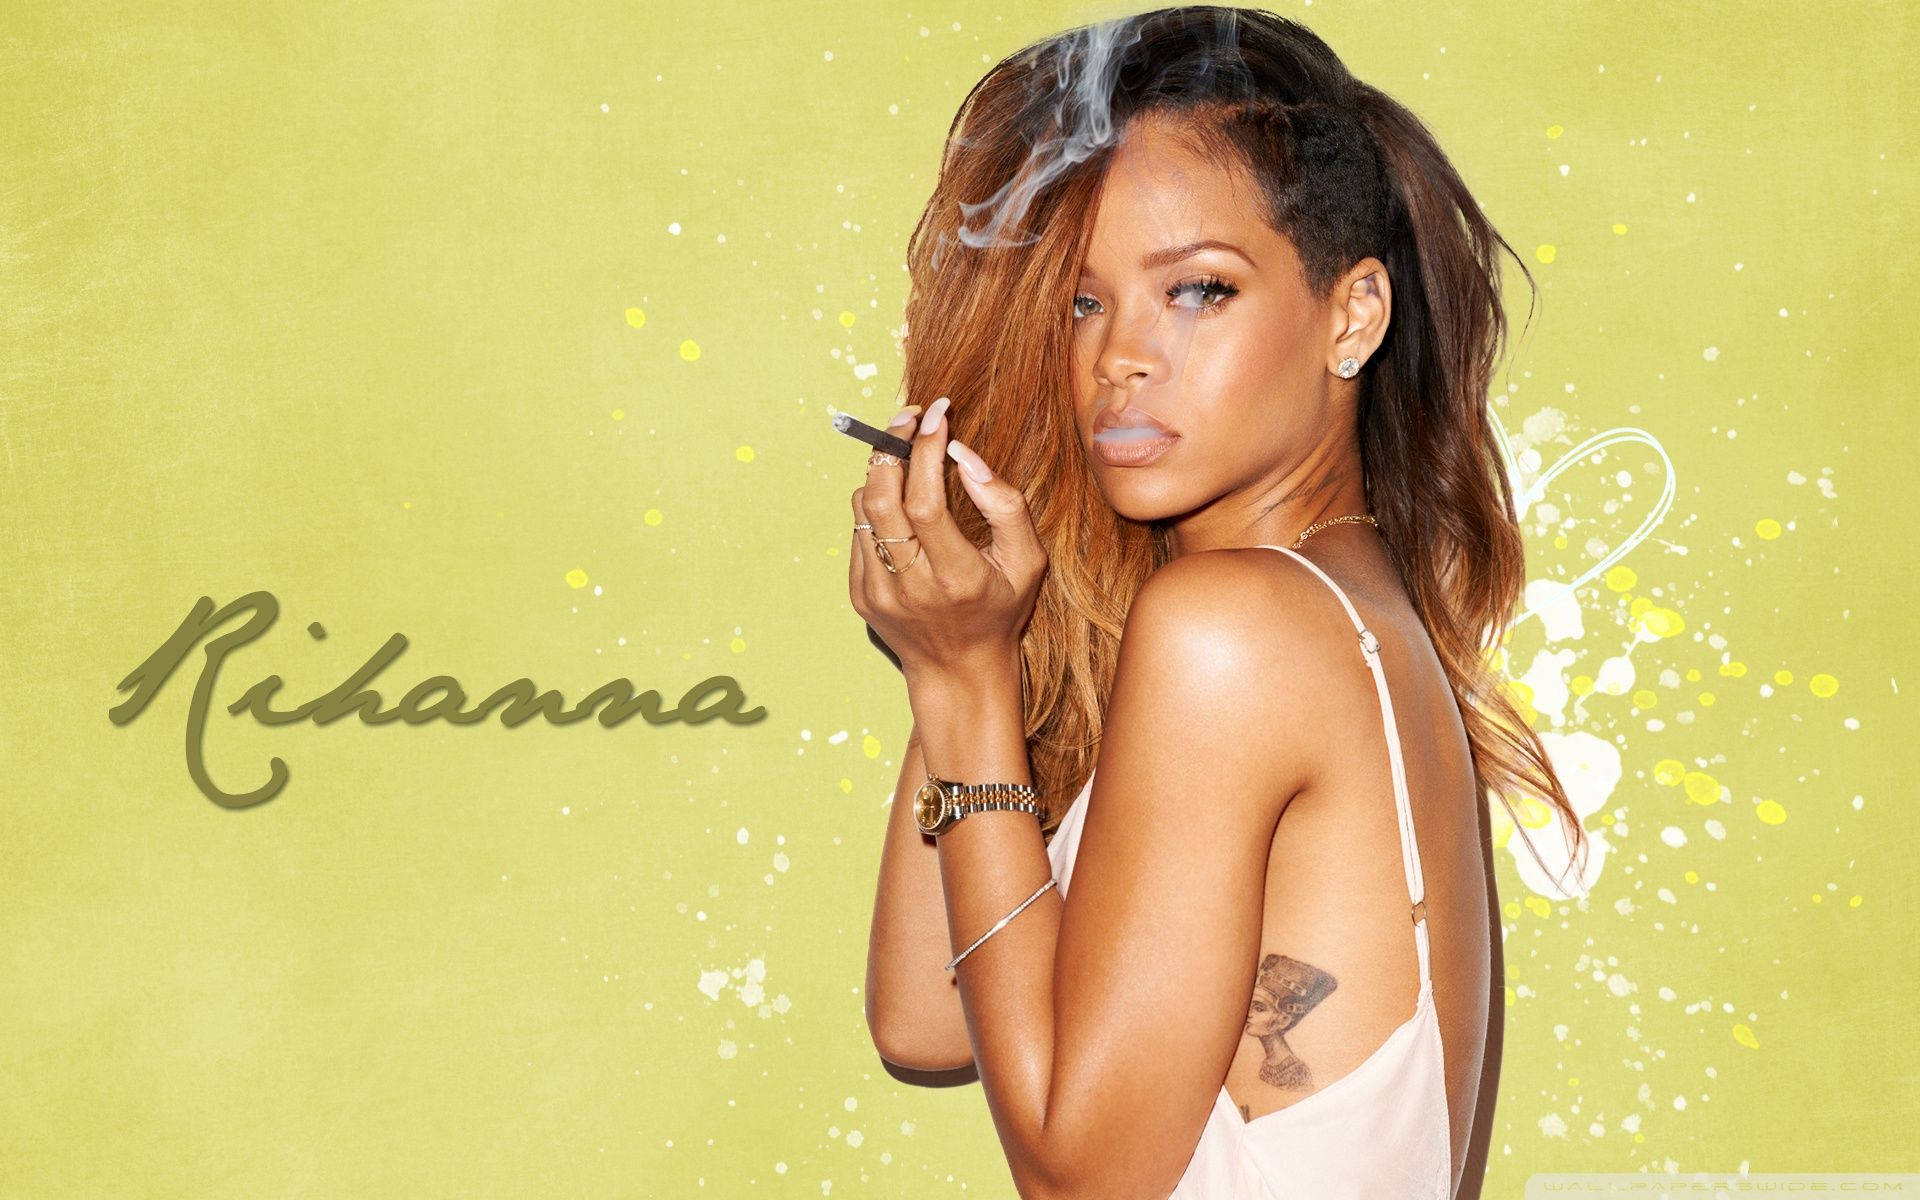 Smoking Rihanna In White Dress